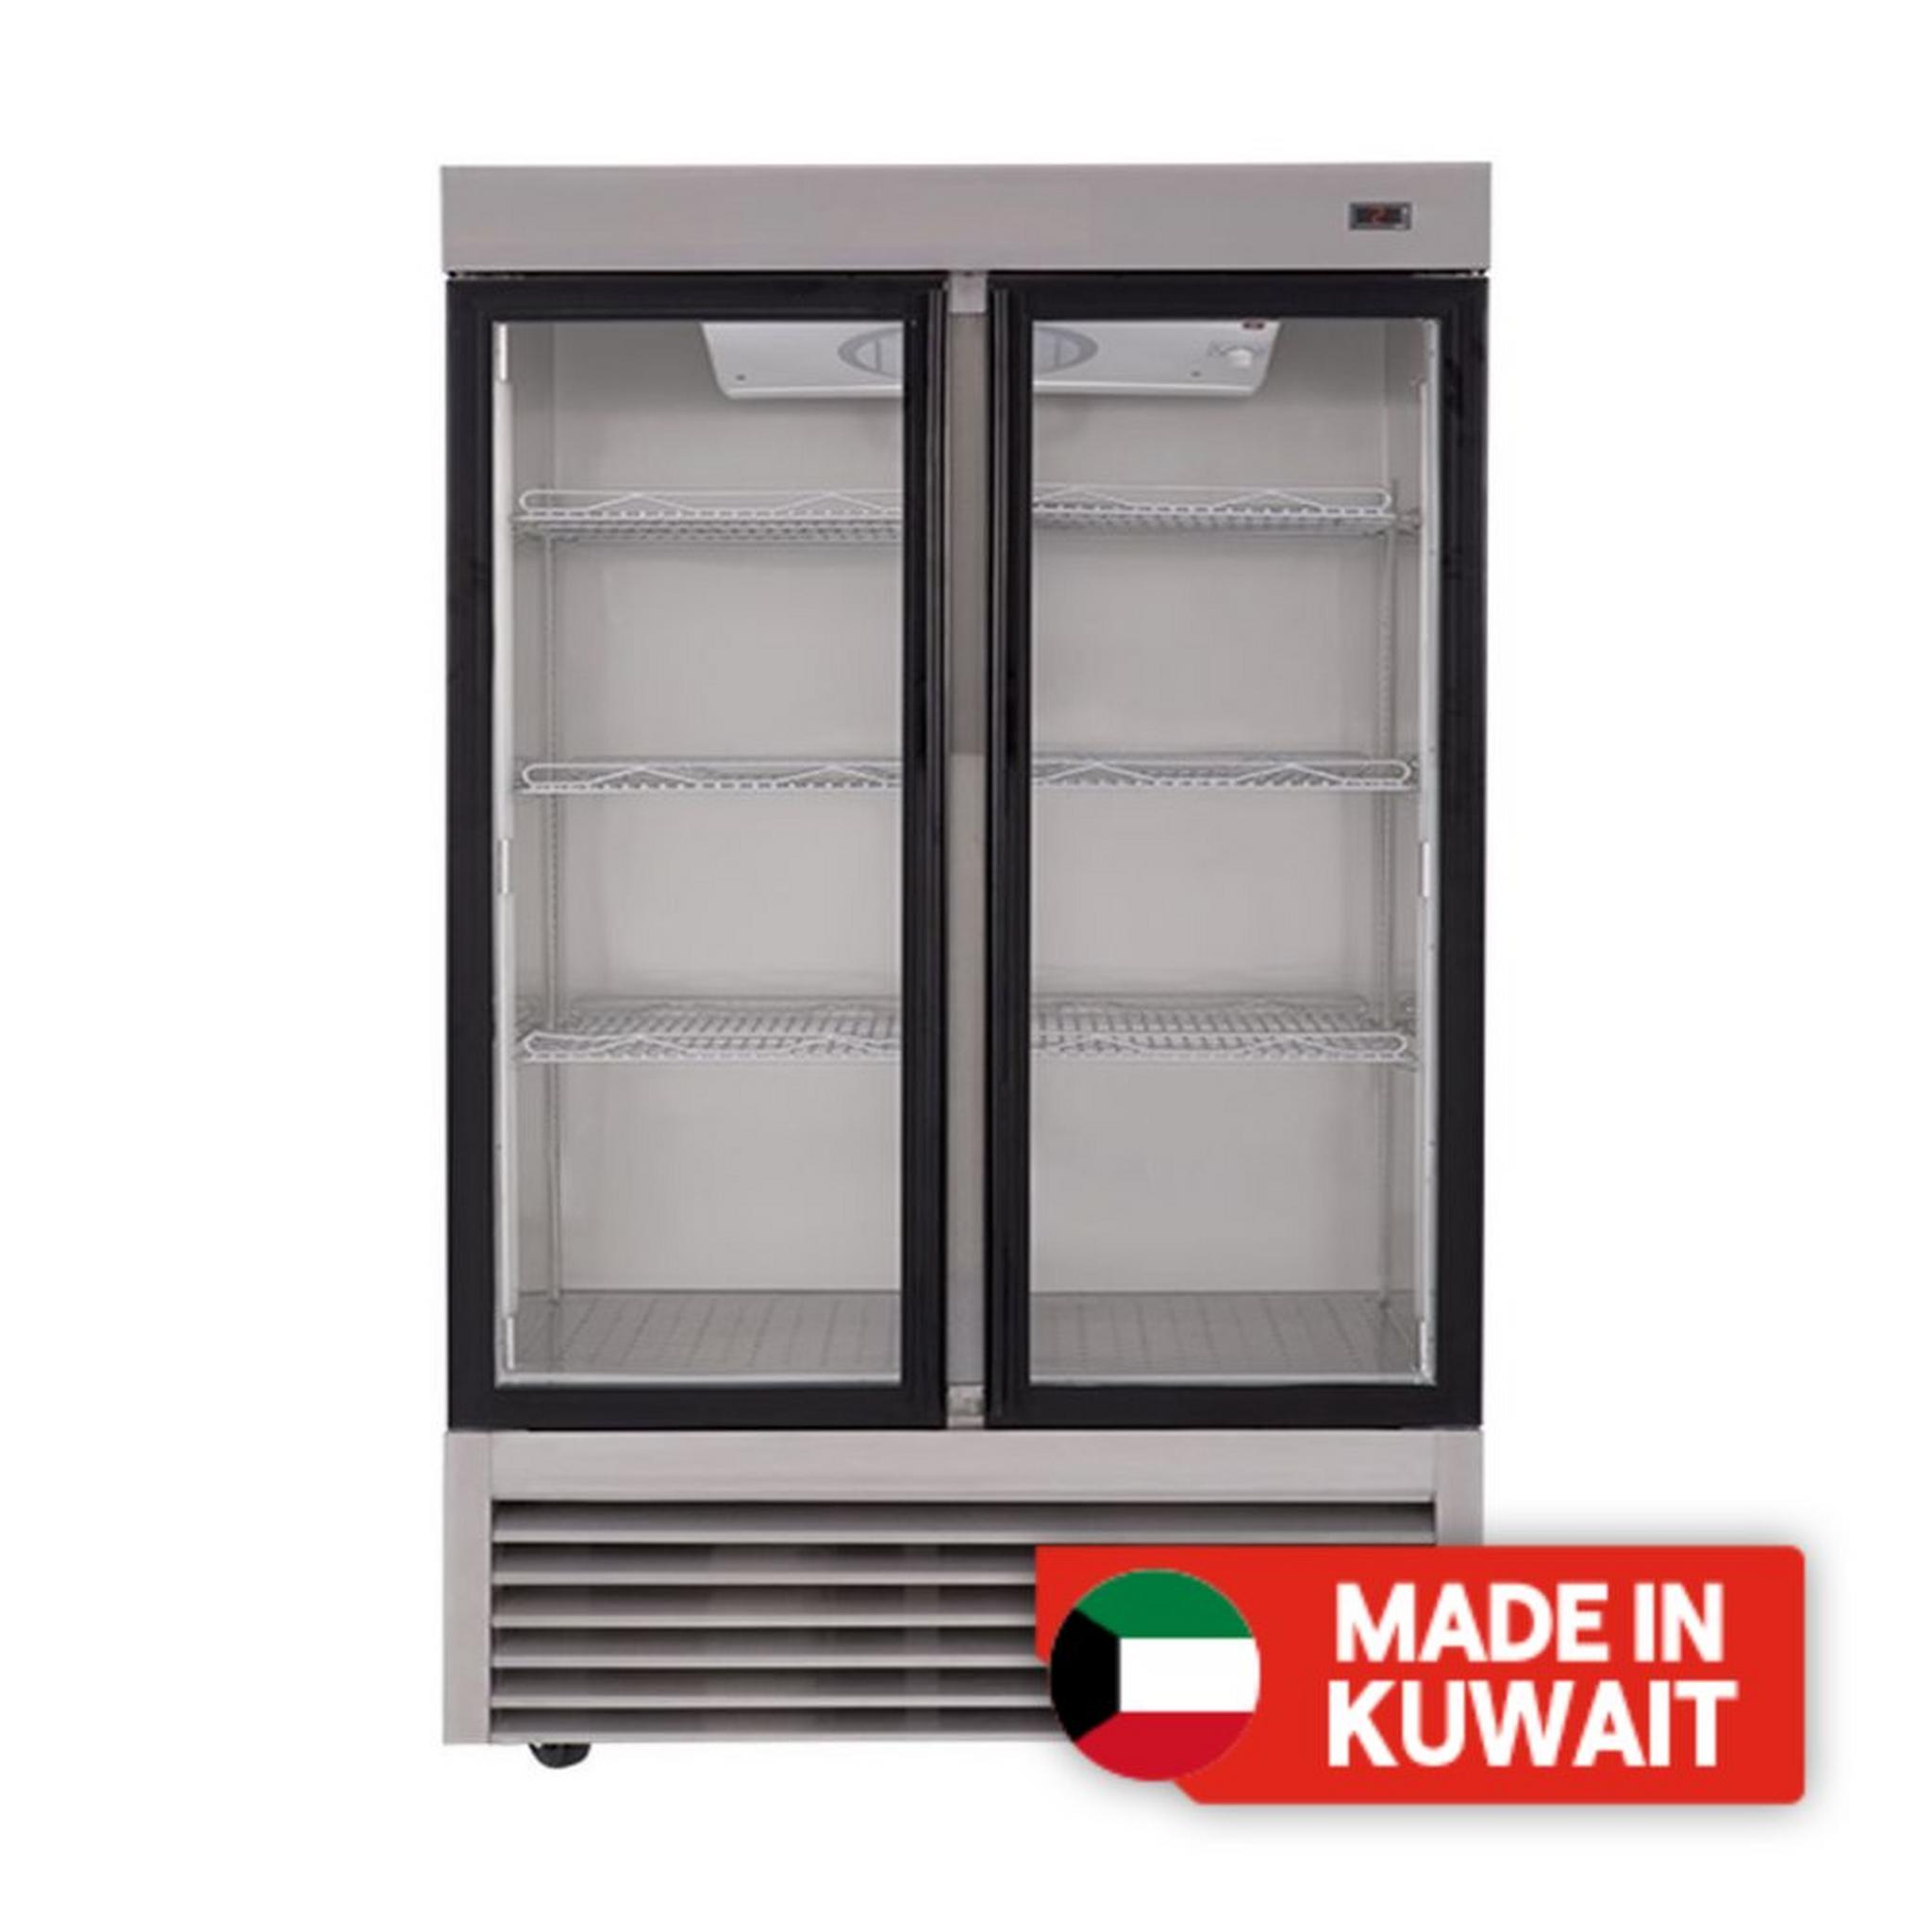 Wansa 34 Cft. Window Refrigerator (2GDHAS) - Stainless Steel